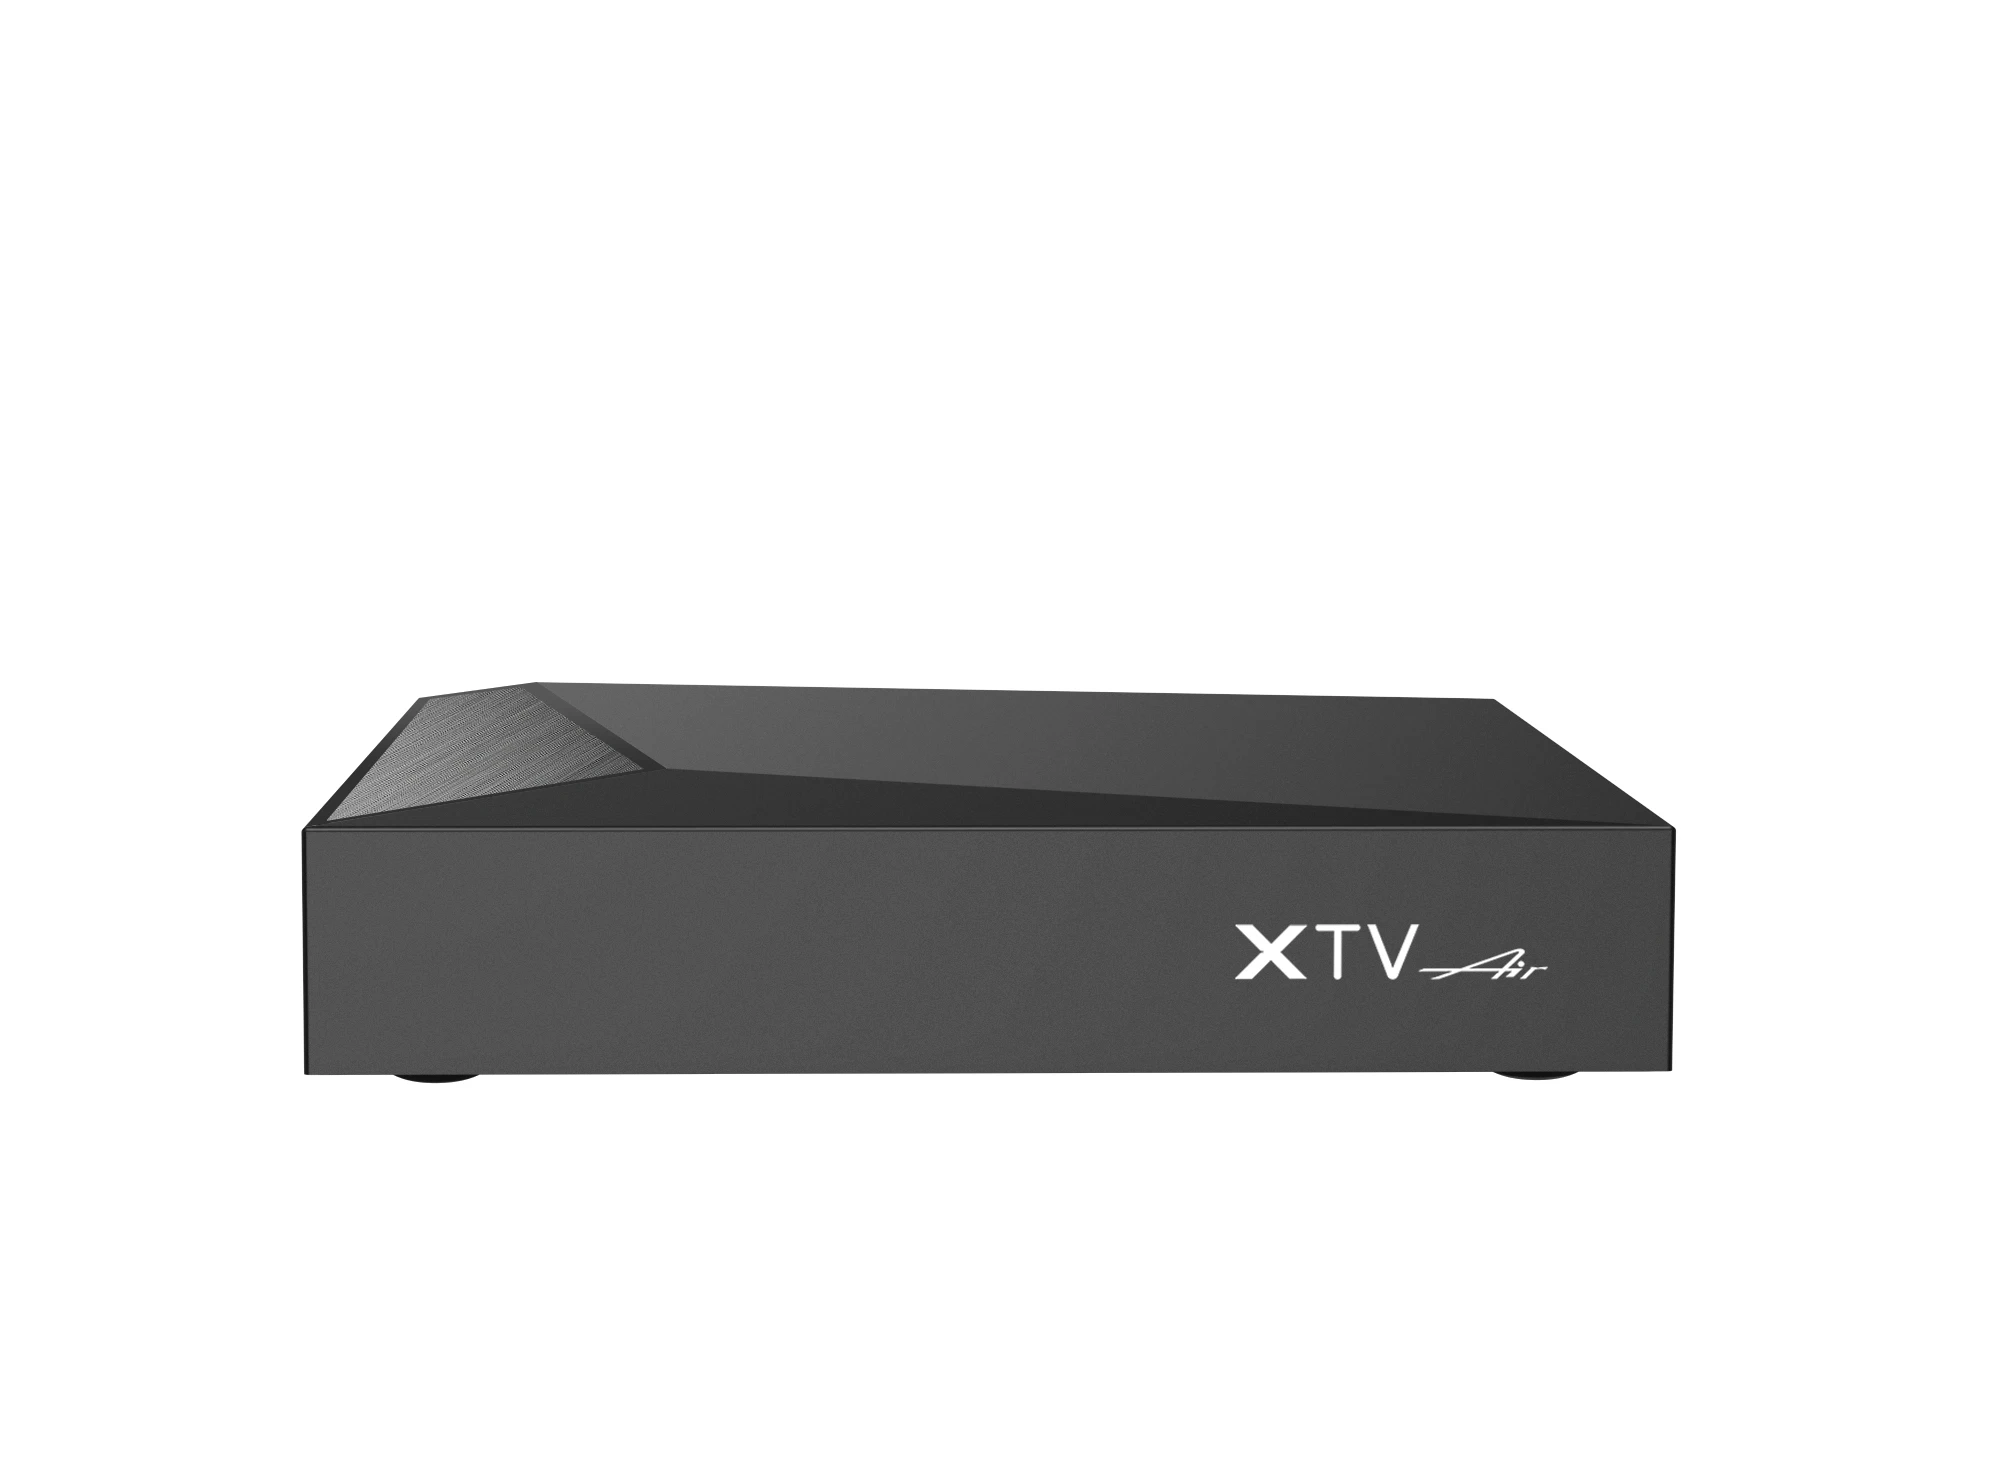 XTV-Dispositivo de TV inteligente Air, decodificador con Amlogic S905W2, cuatro núcleos, 1,8 GHz, 4K, HDR + BT, HD, LAN, 100M, AV1